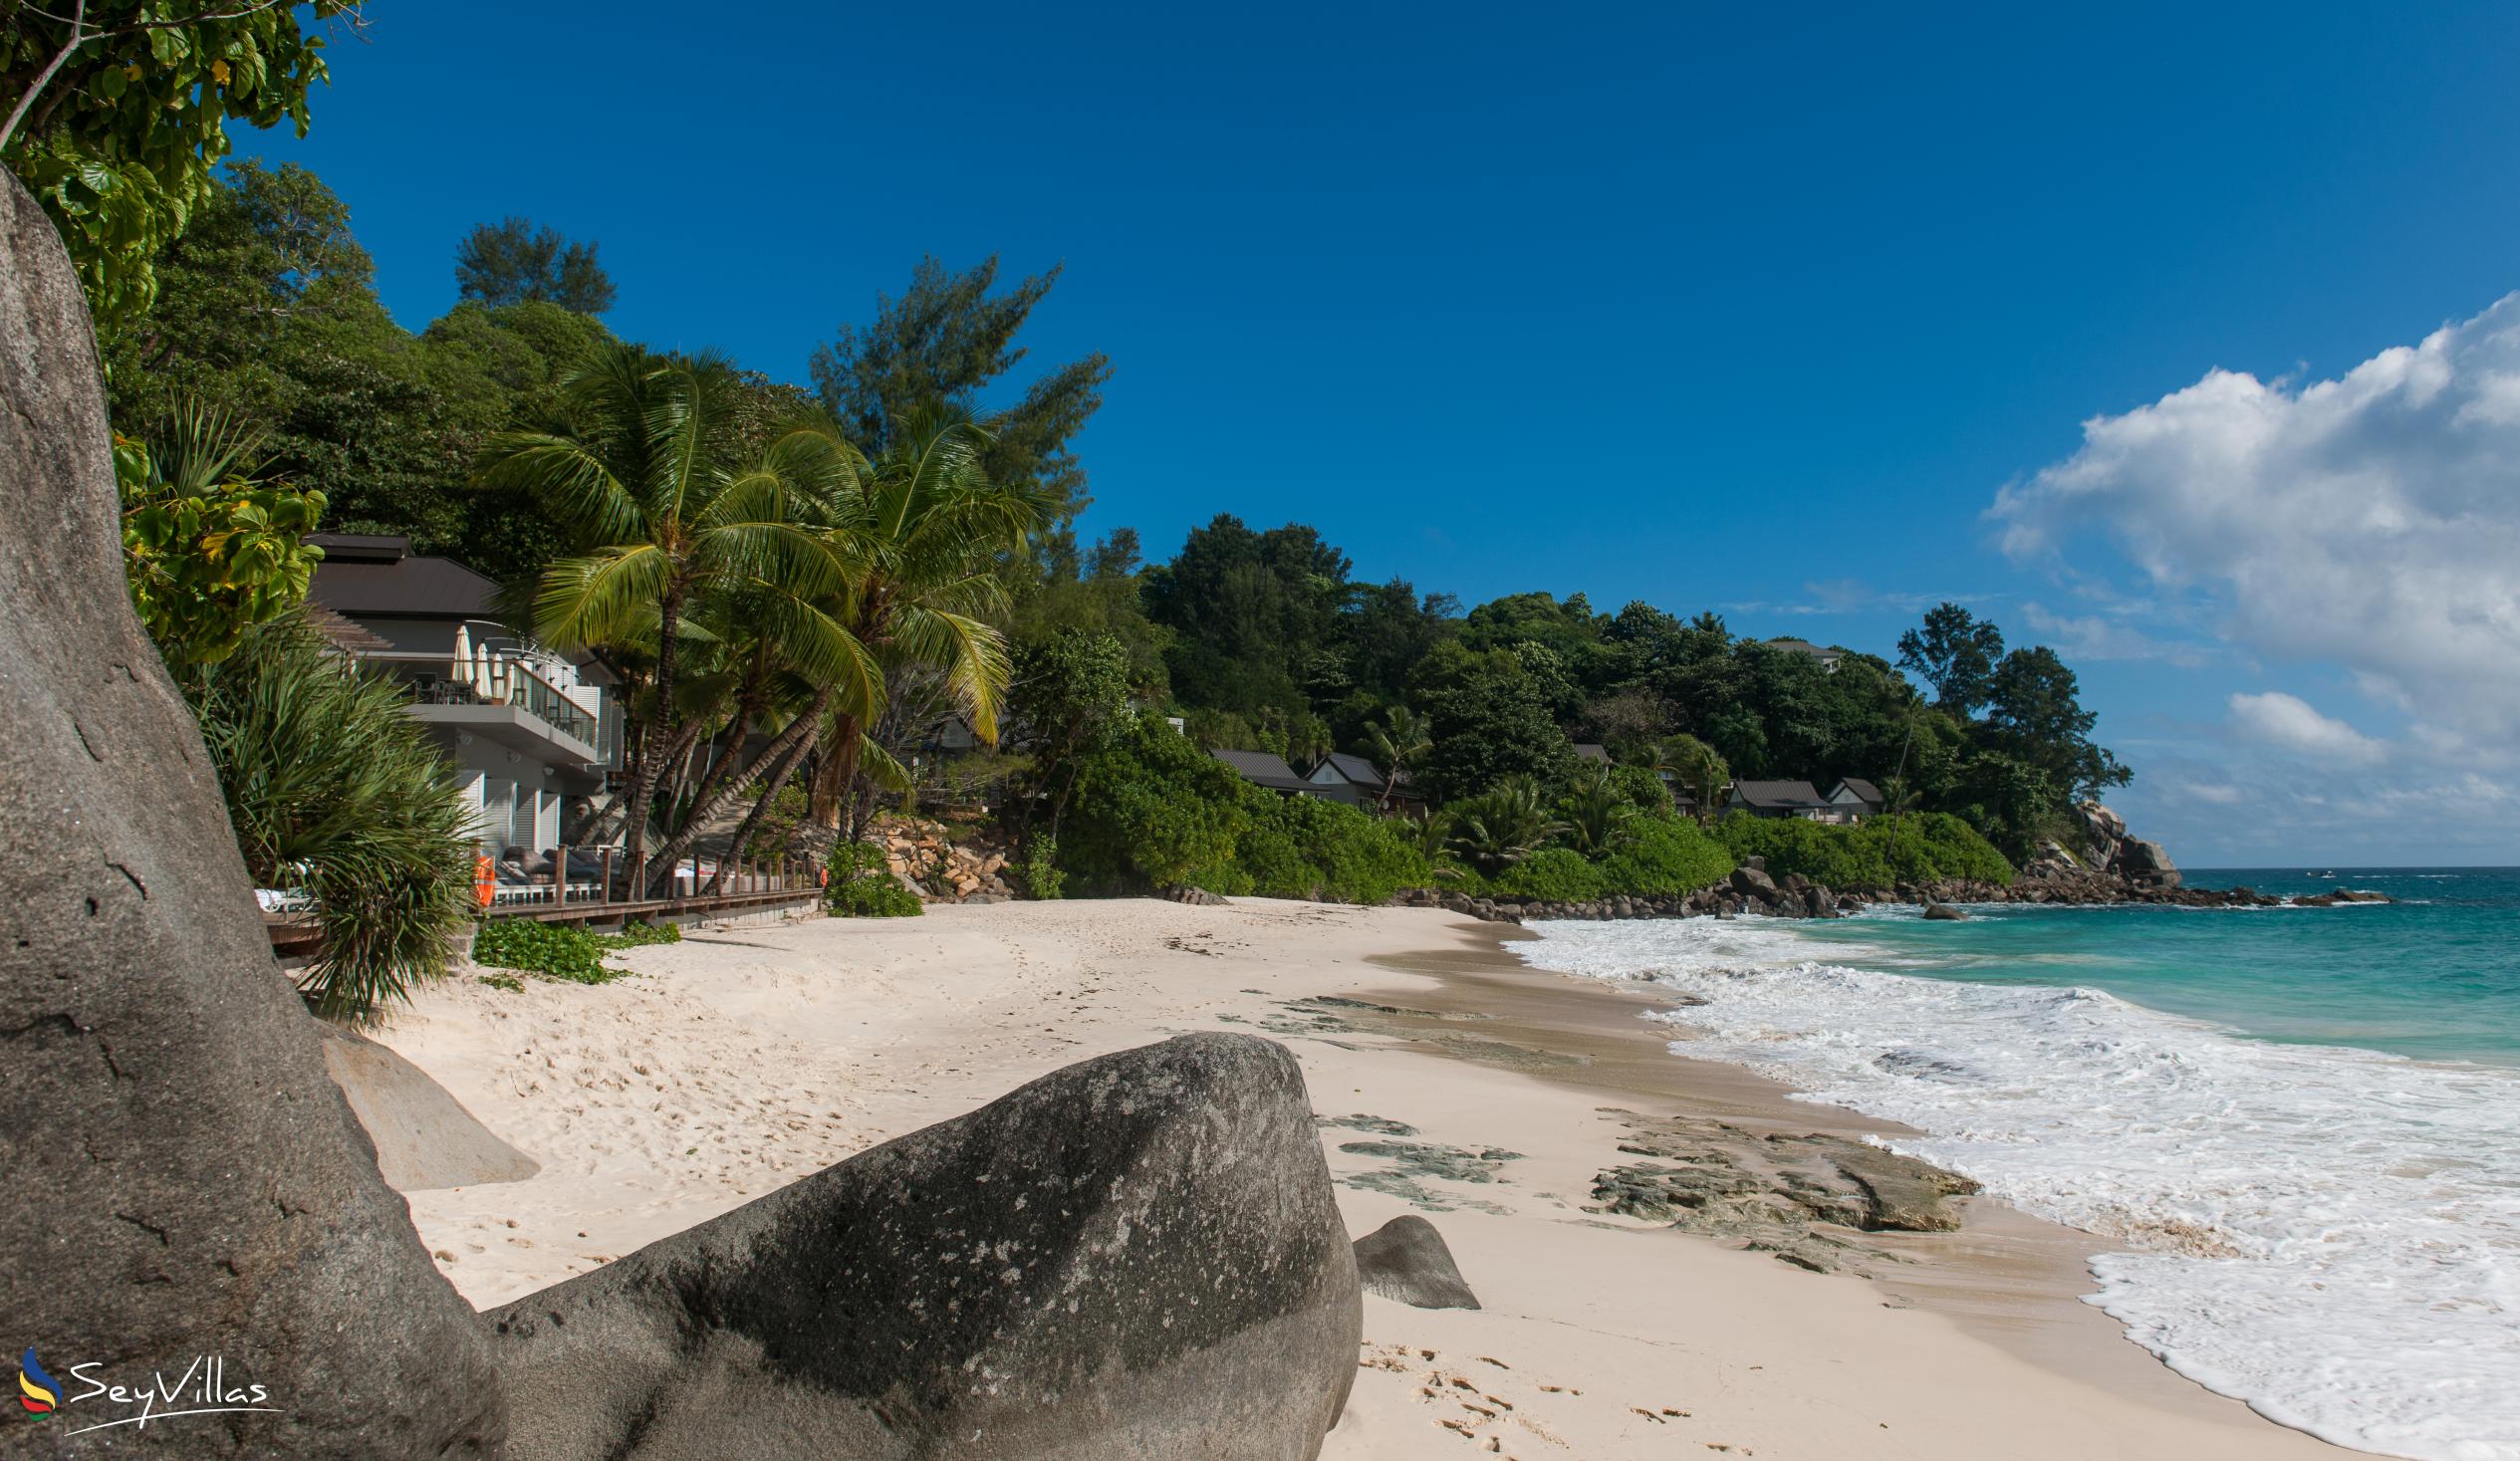 Photo 1: Carana Beach Hotel - Outdoor area - Mahé (Seychelles)